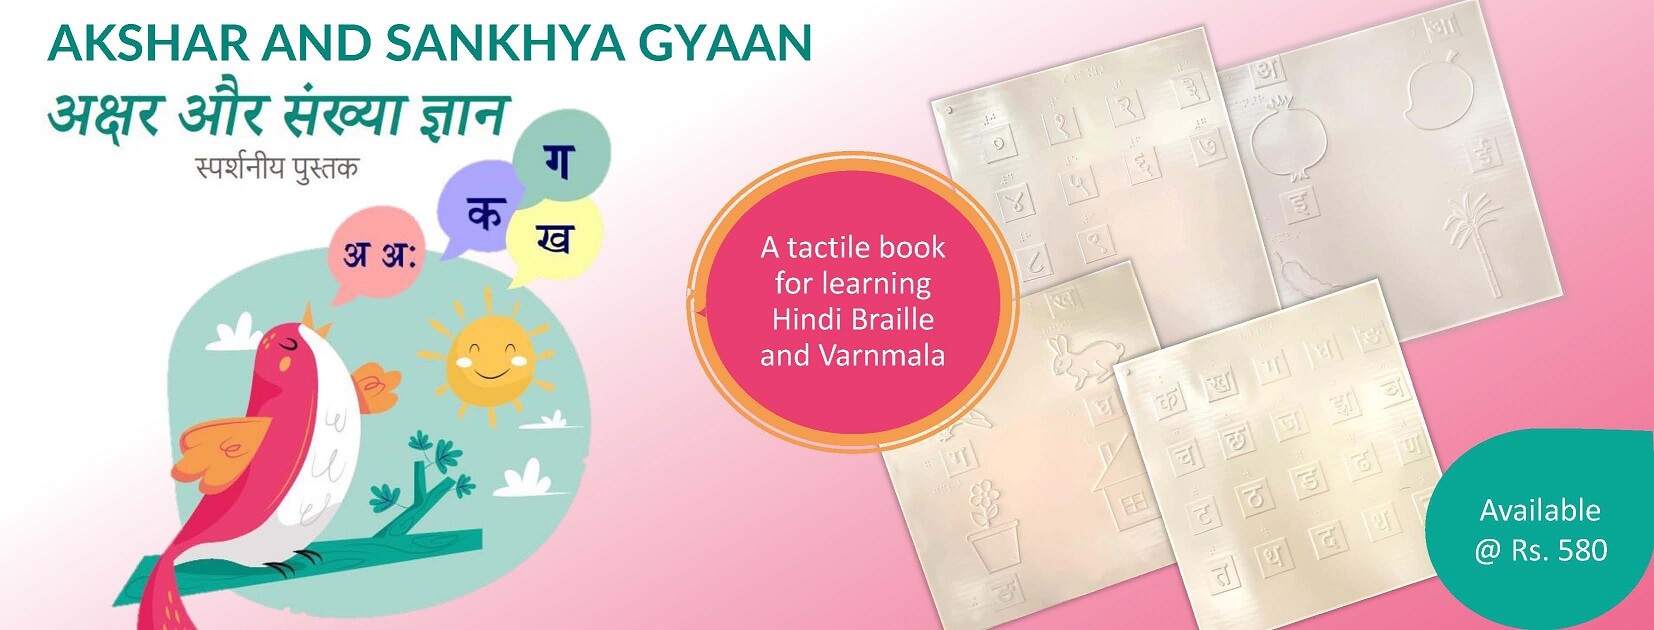 uni/upload/Akshar aur Sankhyagan. A tactile book for learning hindi braille and varnamala. Click to avail at Rs 580/-